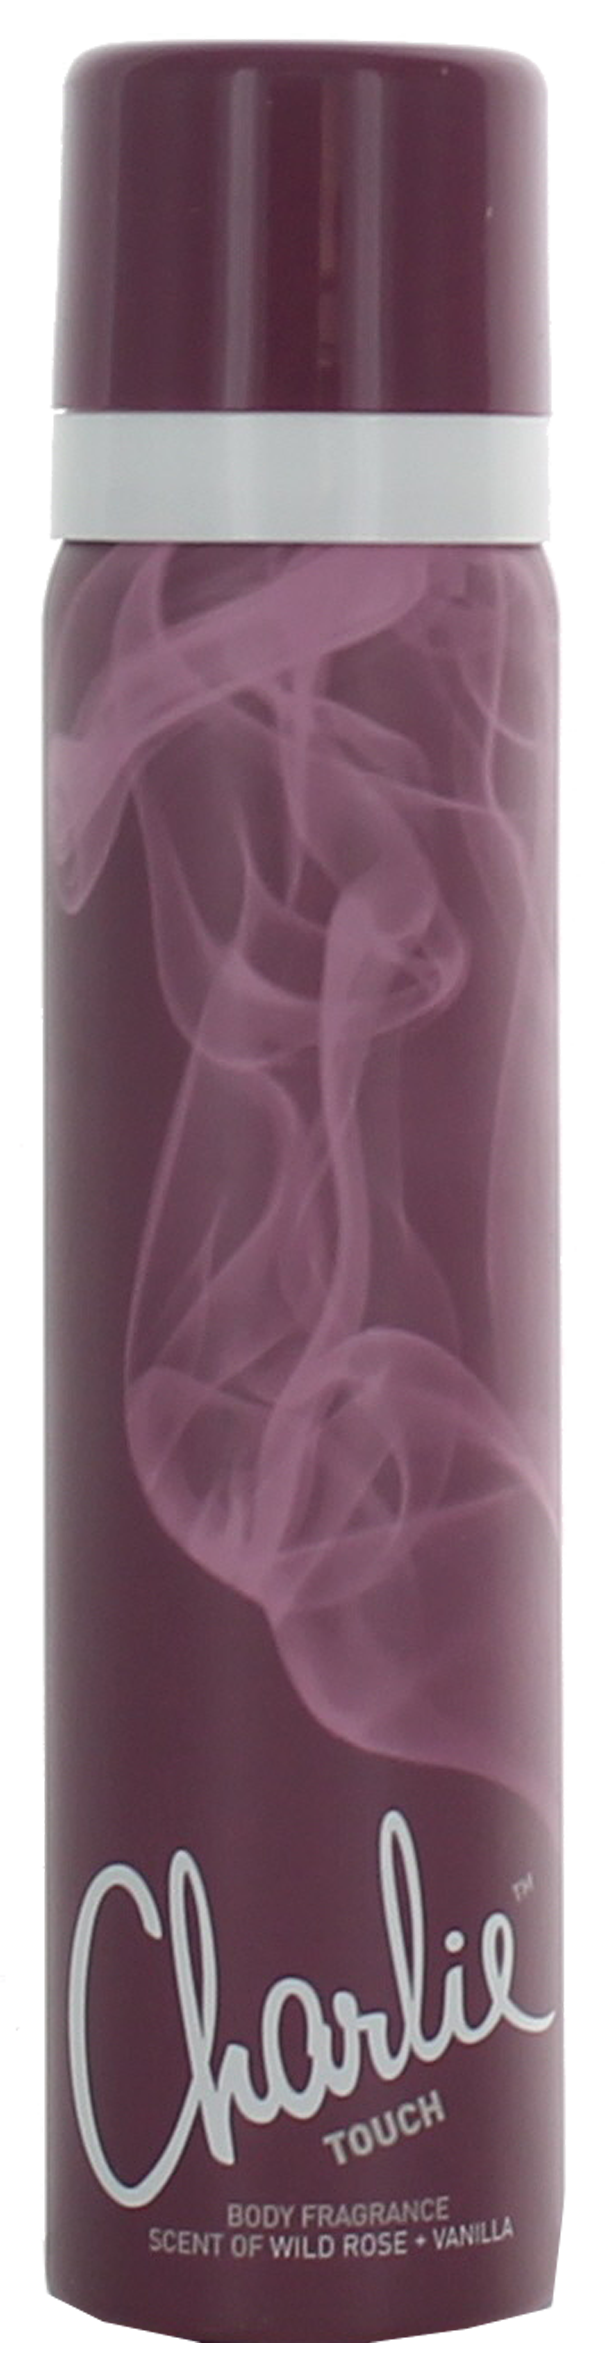 revlon touch (w) body fragance spray 2.5oz